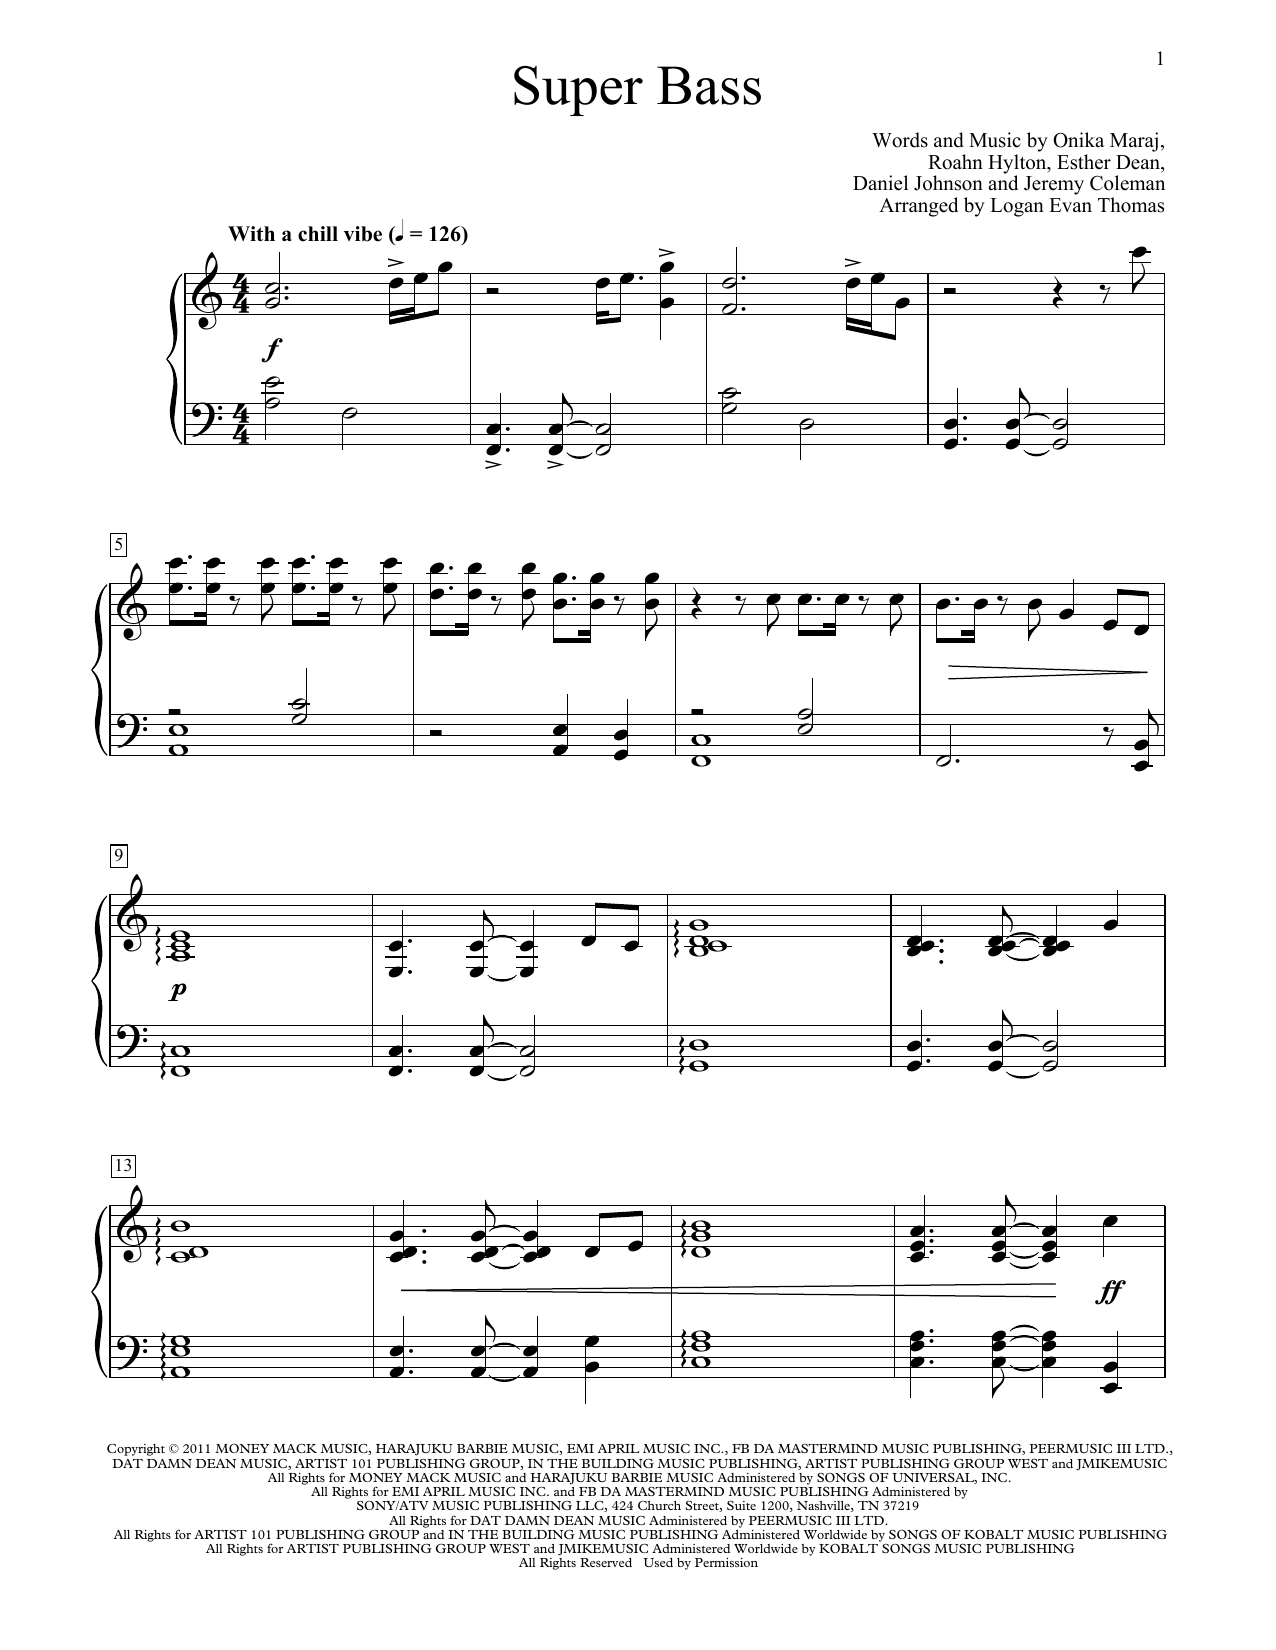 Nicki Minaj Super Bass (arr. Logan Evan Thomas) Sheet Music Notes & Chords for Educational Piano - Download or Print PDF